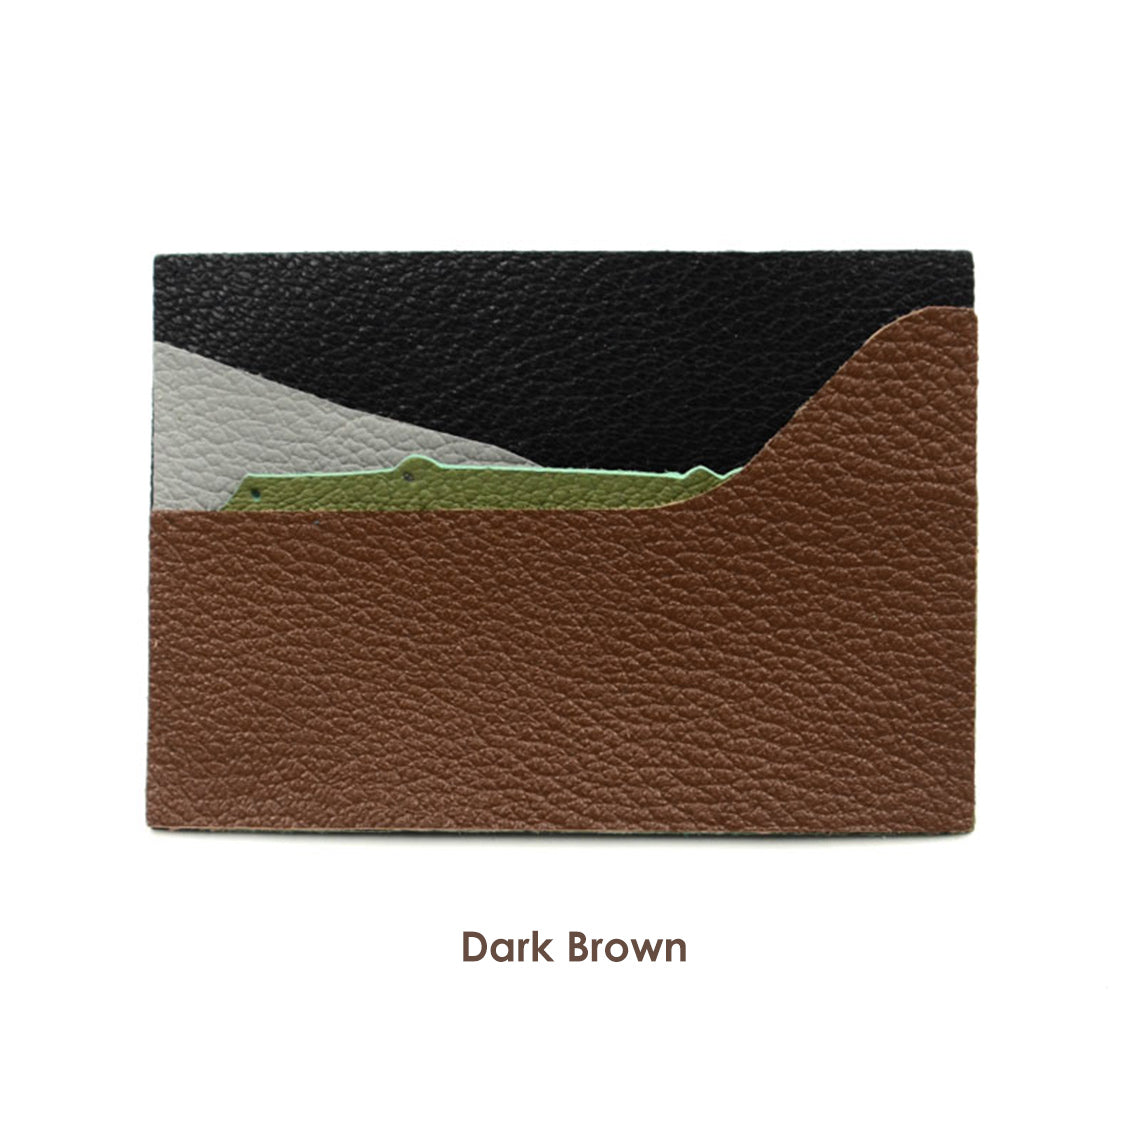 Dark brown leather card wallet | Homemade DIY gift card holder | POPSEWING™